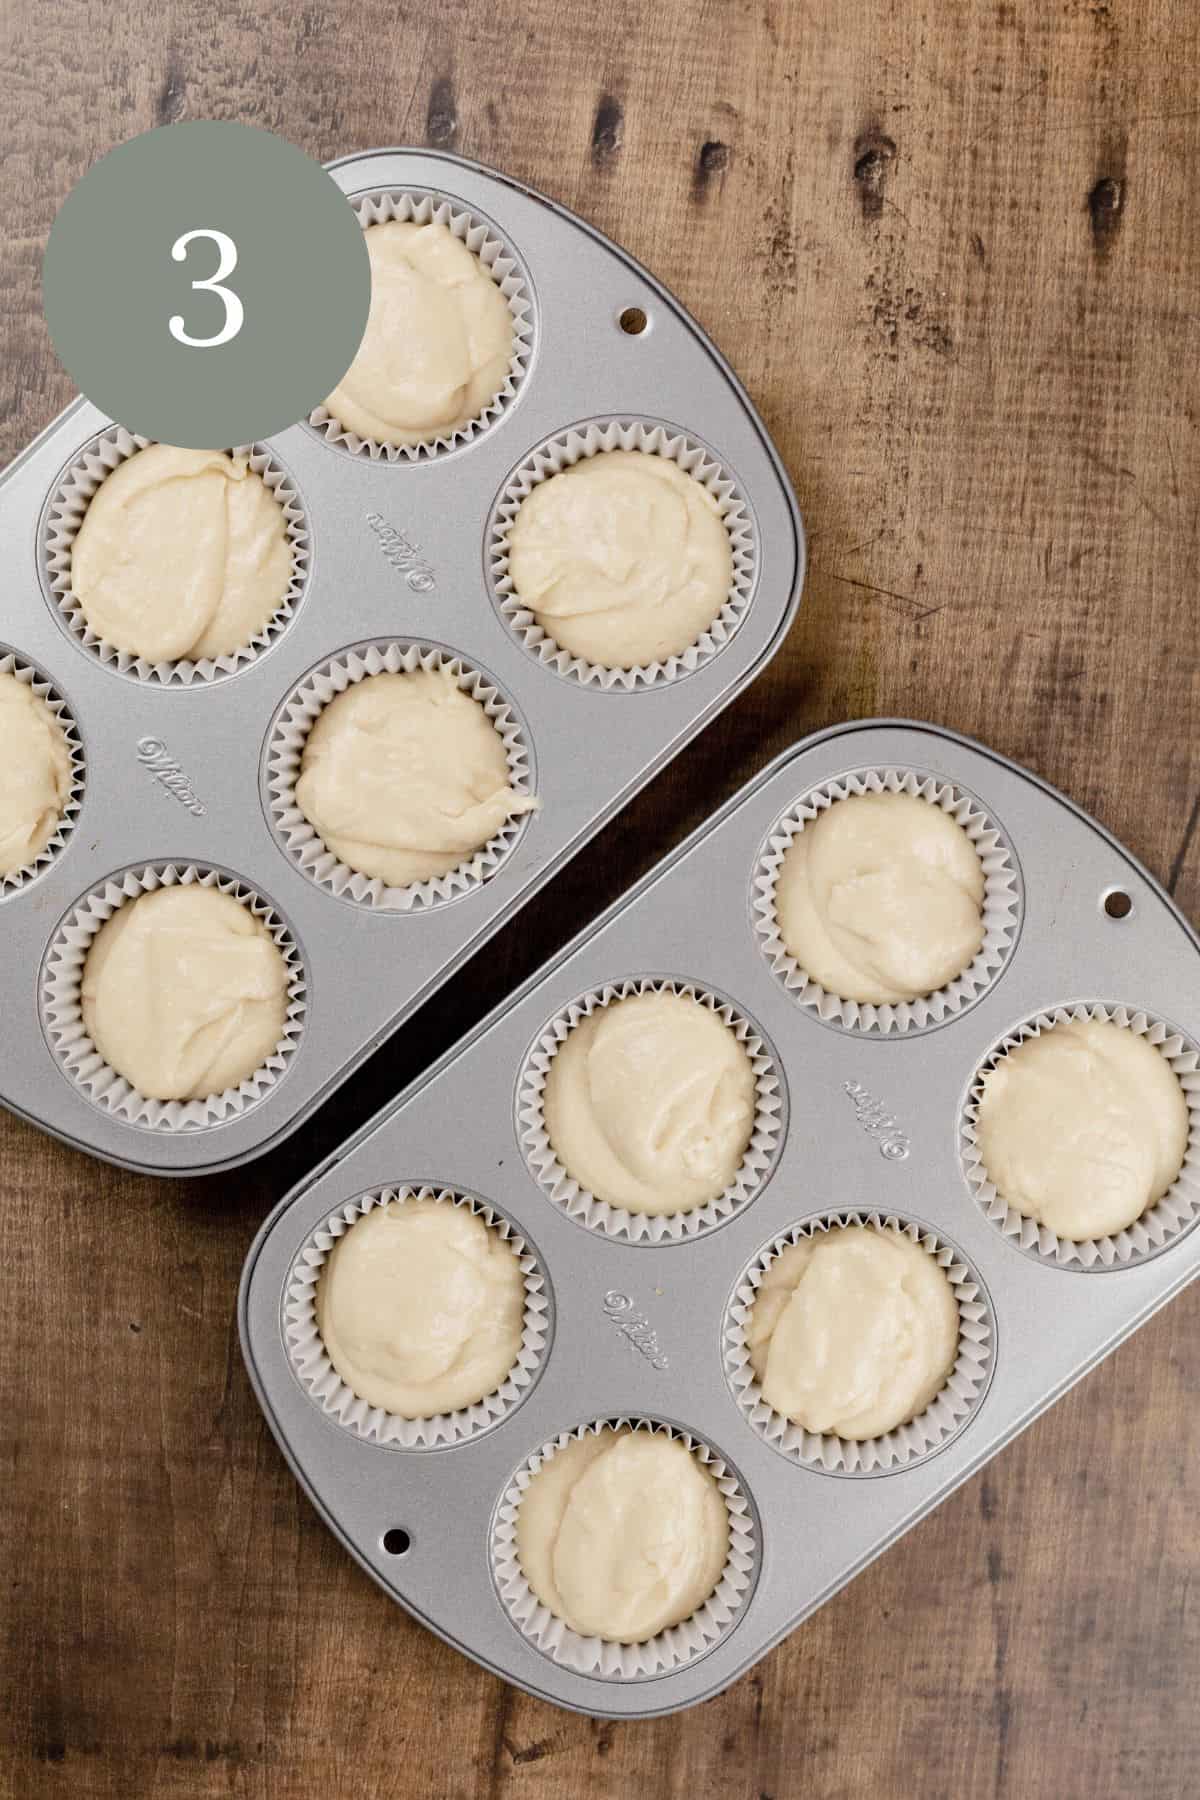 vanilla cupcake batter in the cupcake trays before baking